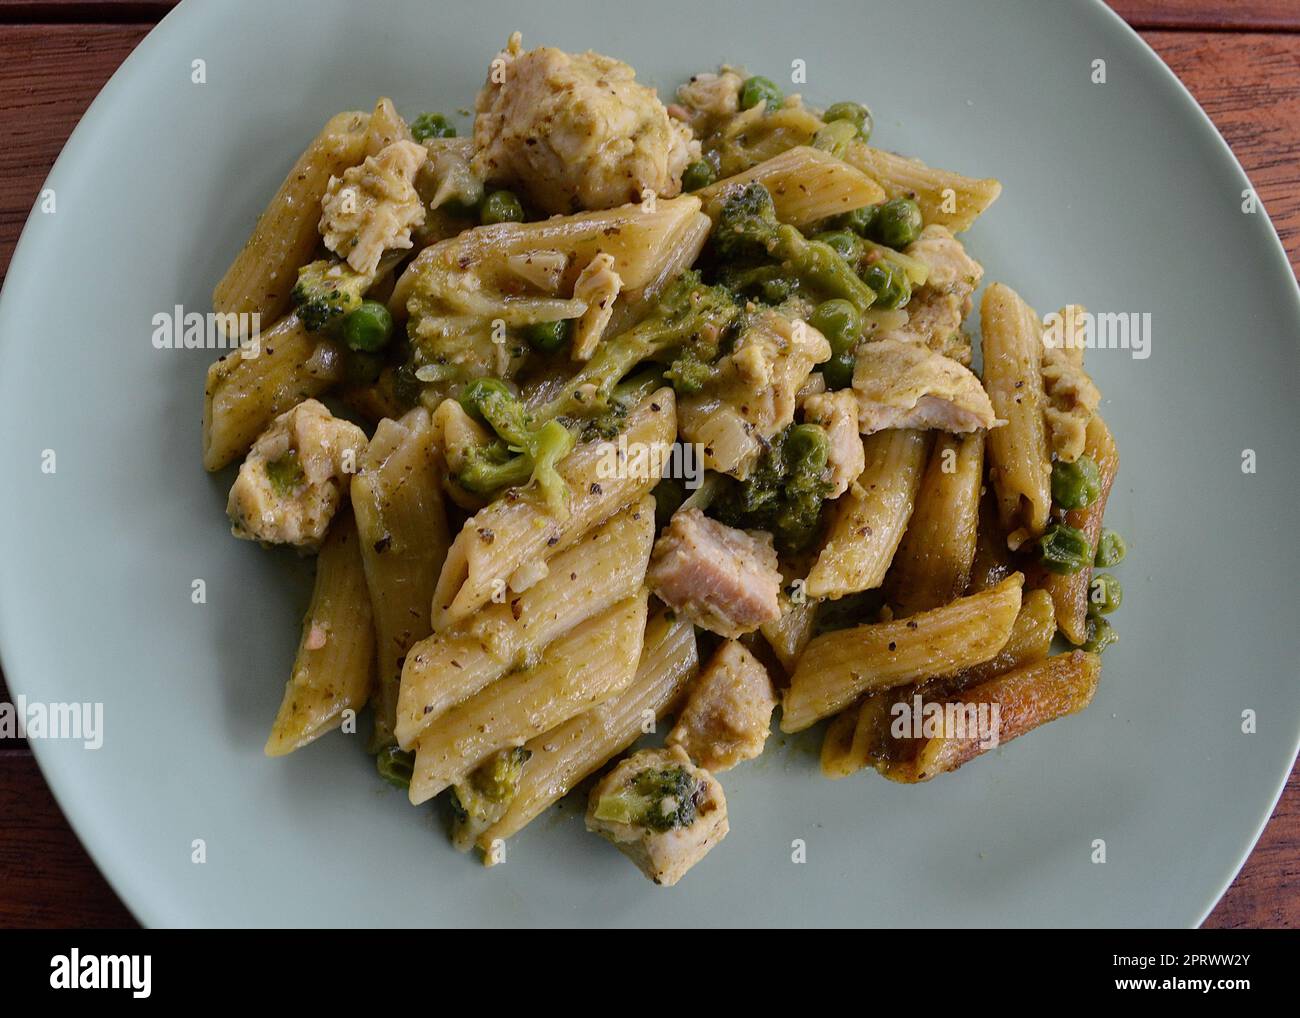 Chicken pesto pasta with vegetables Stock Photo